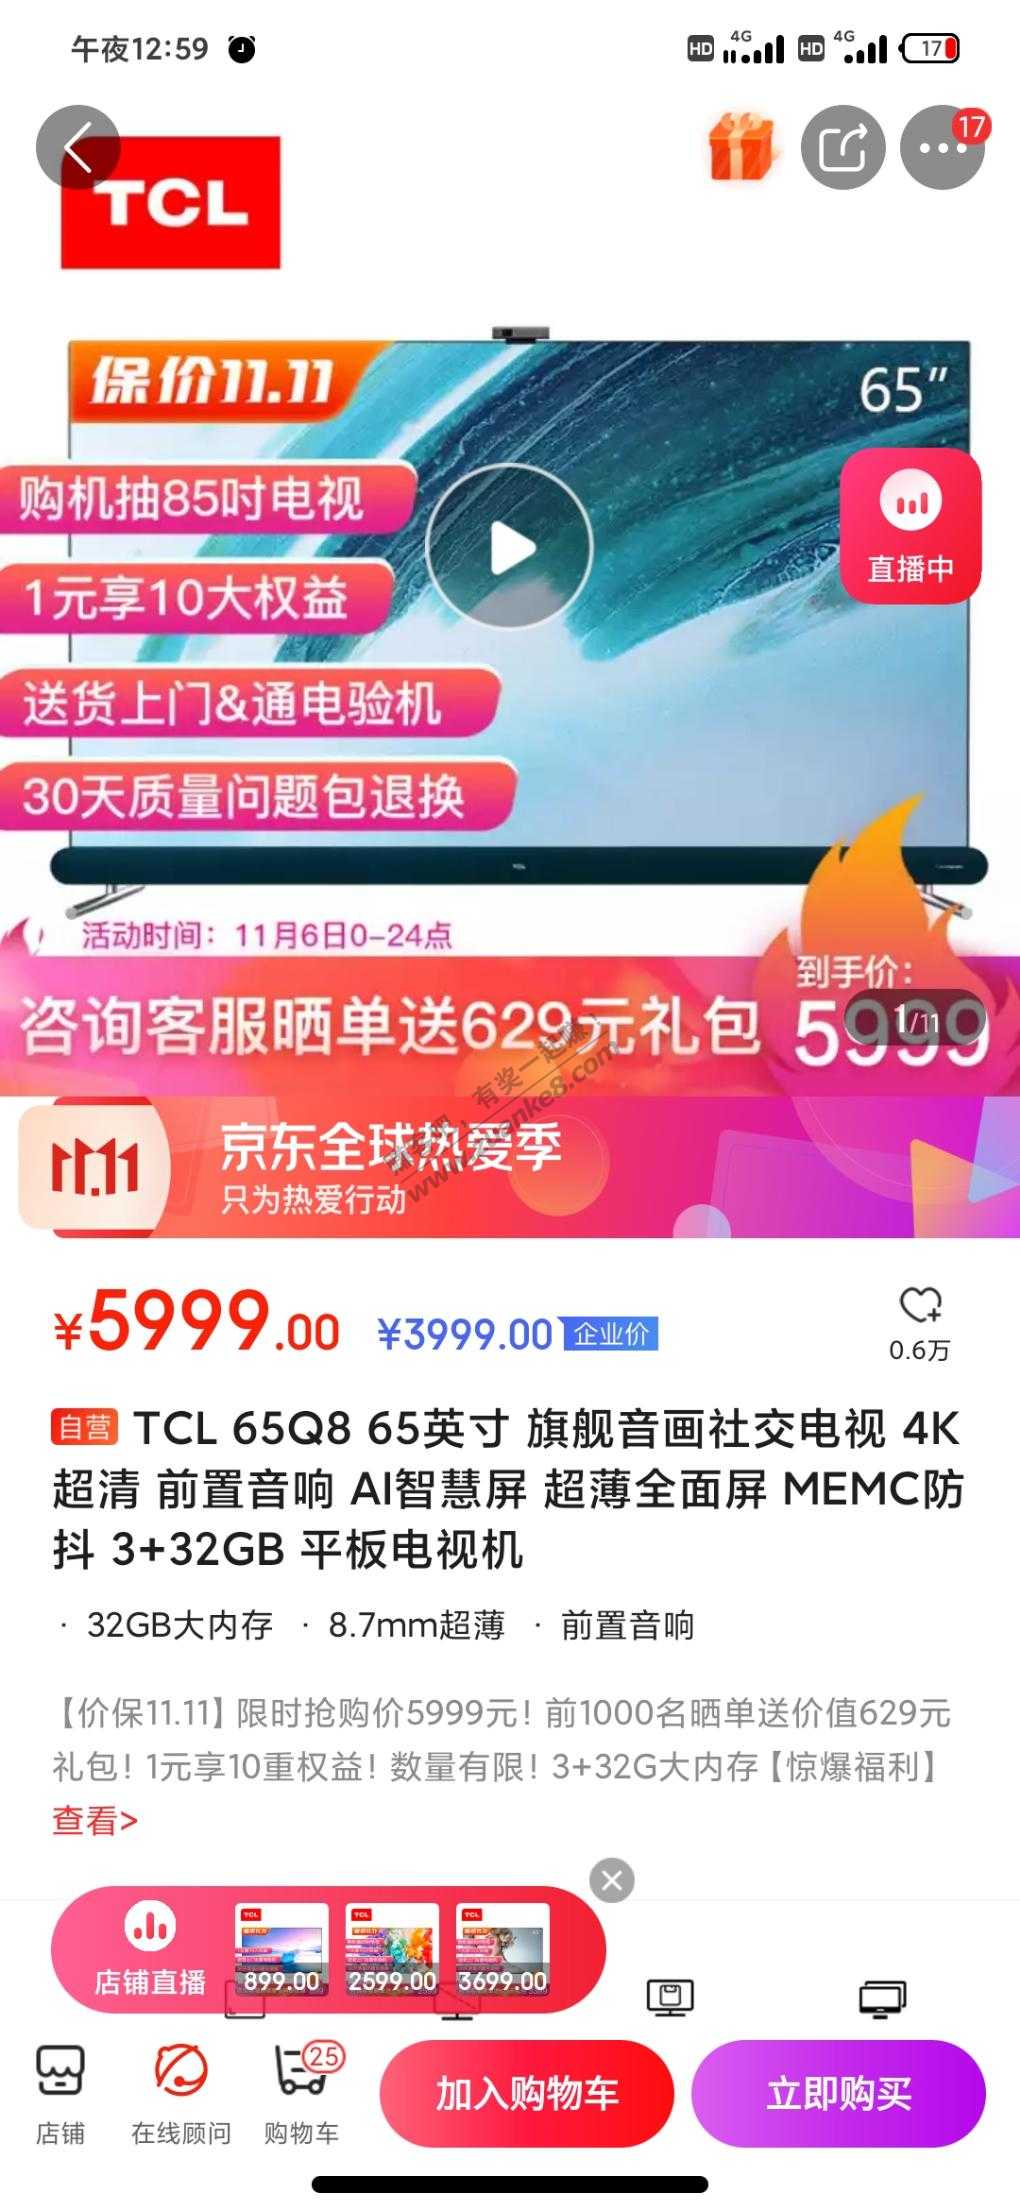 TCL65寸电视好价Q8-企业会员价3999-惠小助(52huixz.com)